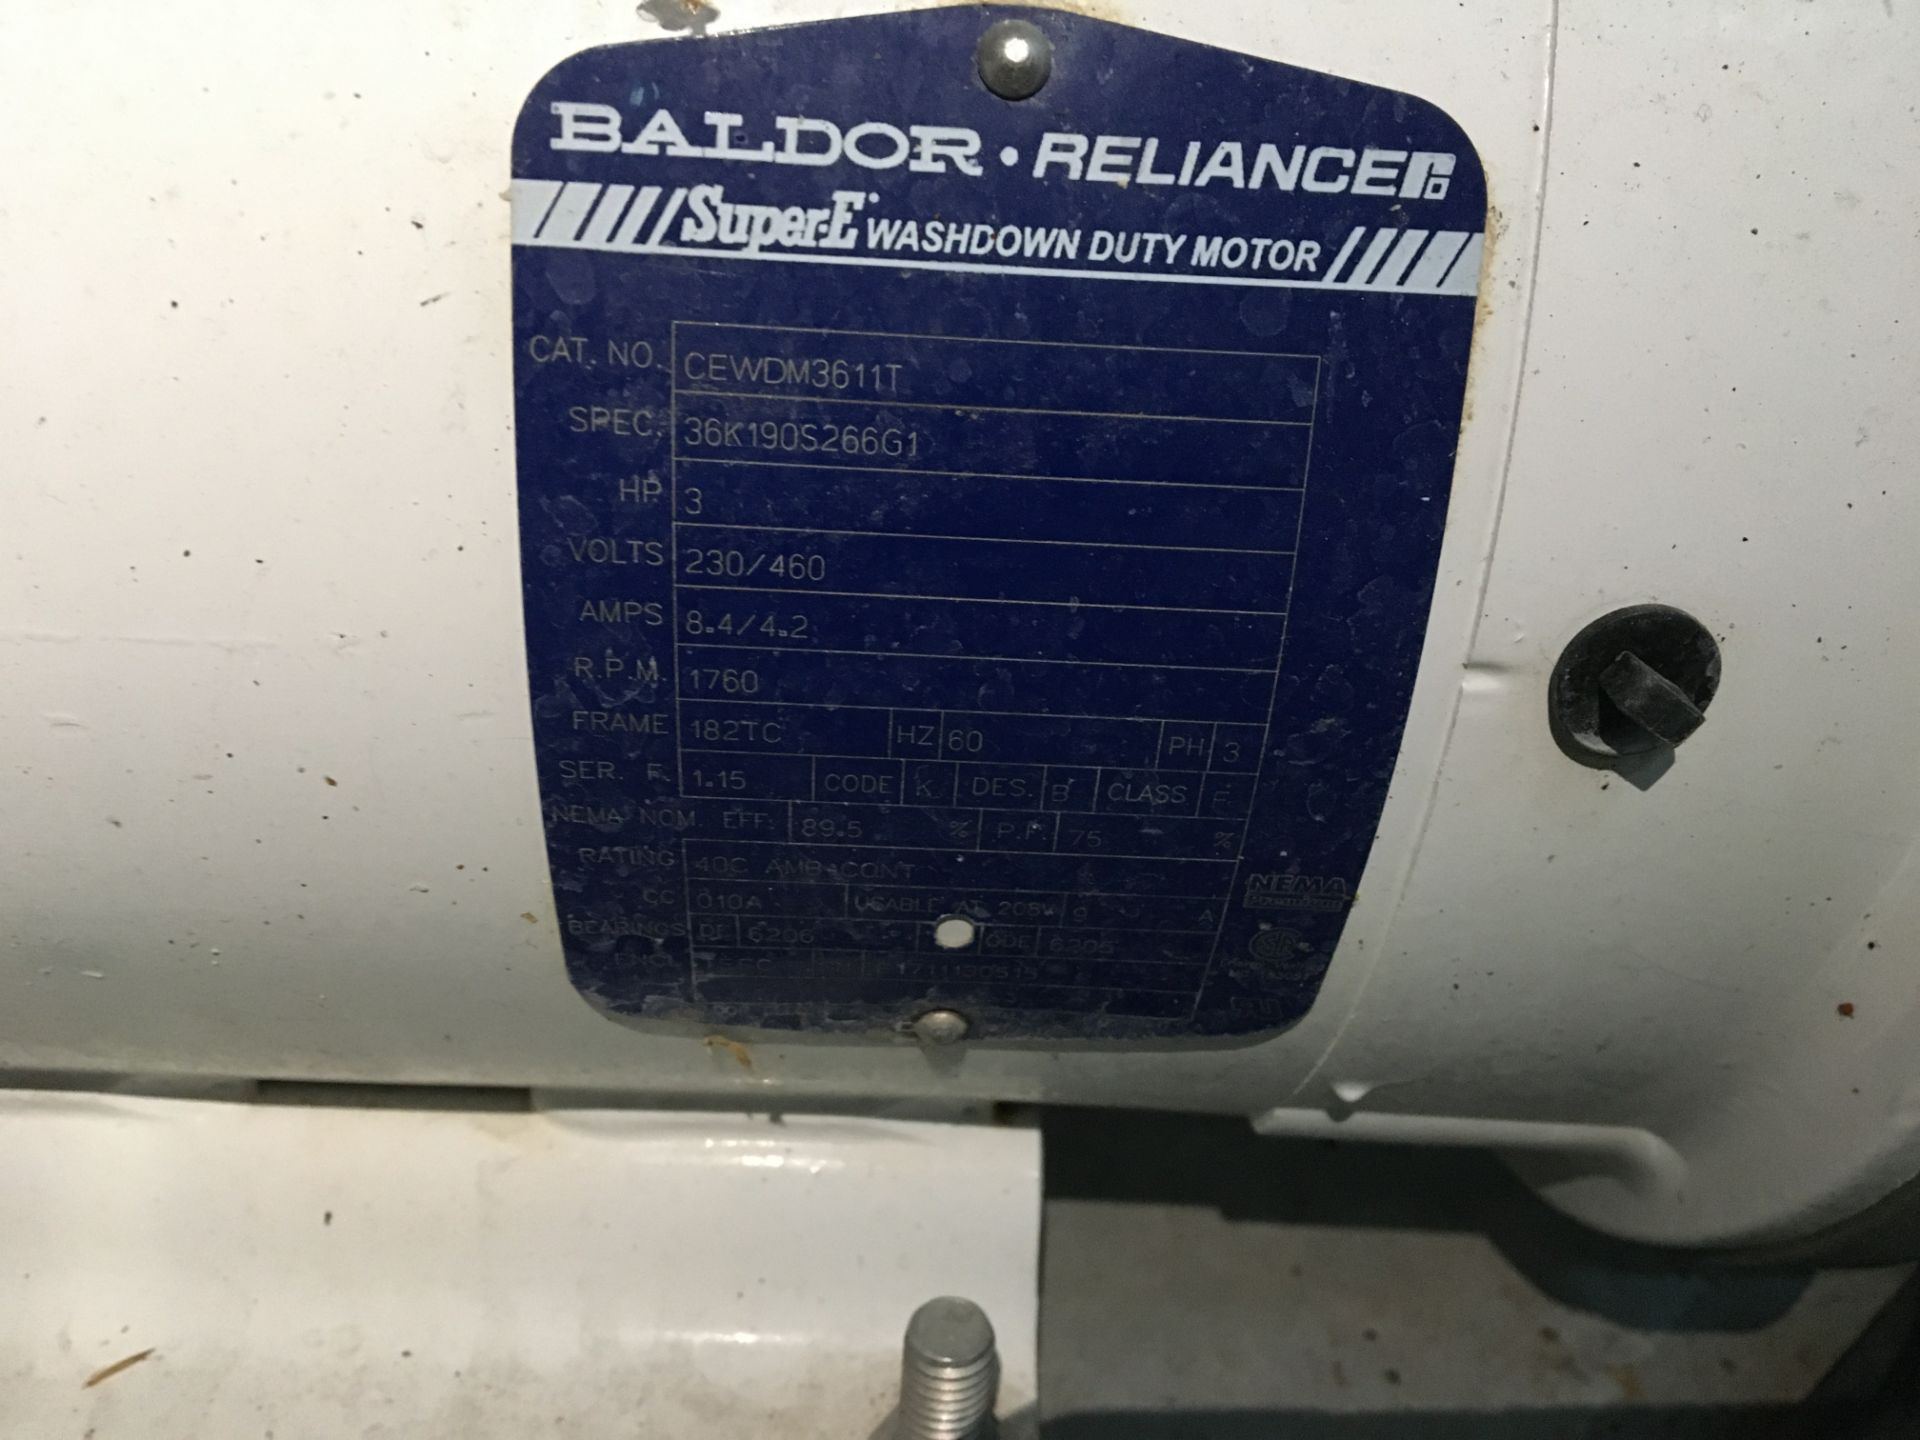 4 ea. Baldor-Reliance 3 HP Motors, Model 36K190S266G1, Serial Number F1711130515, F1711130410, - Image 6 of 27